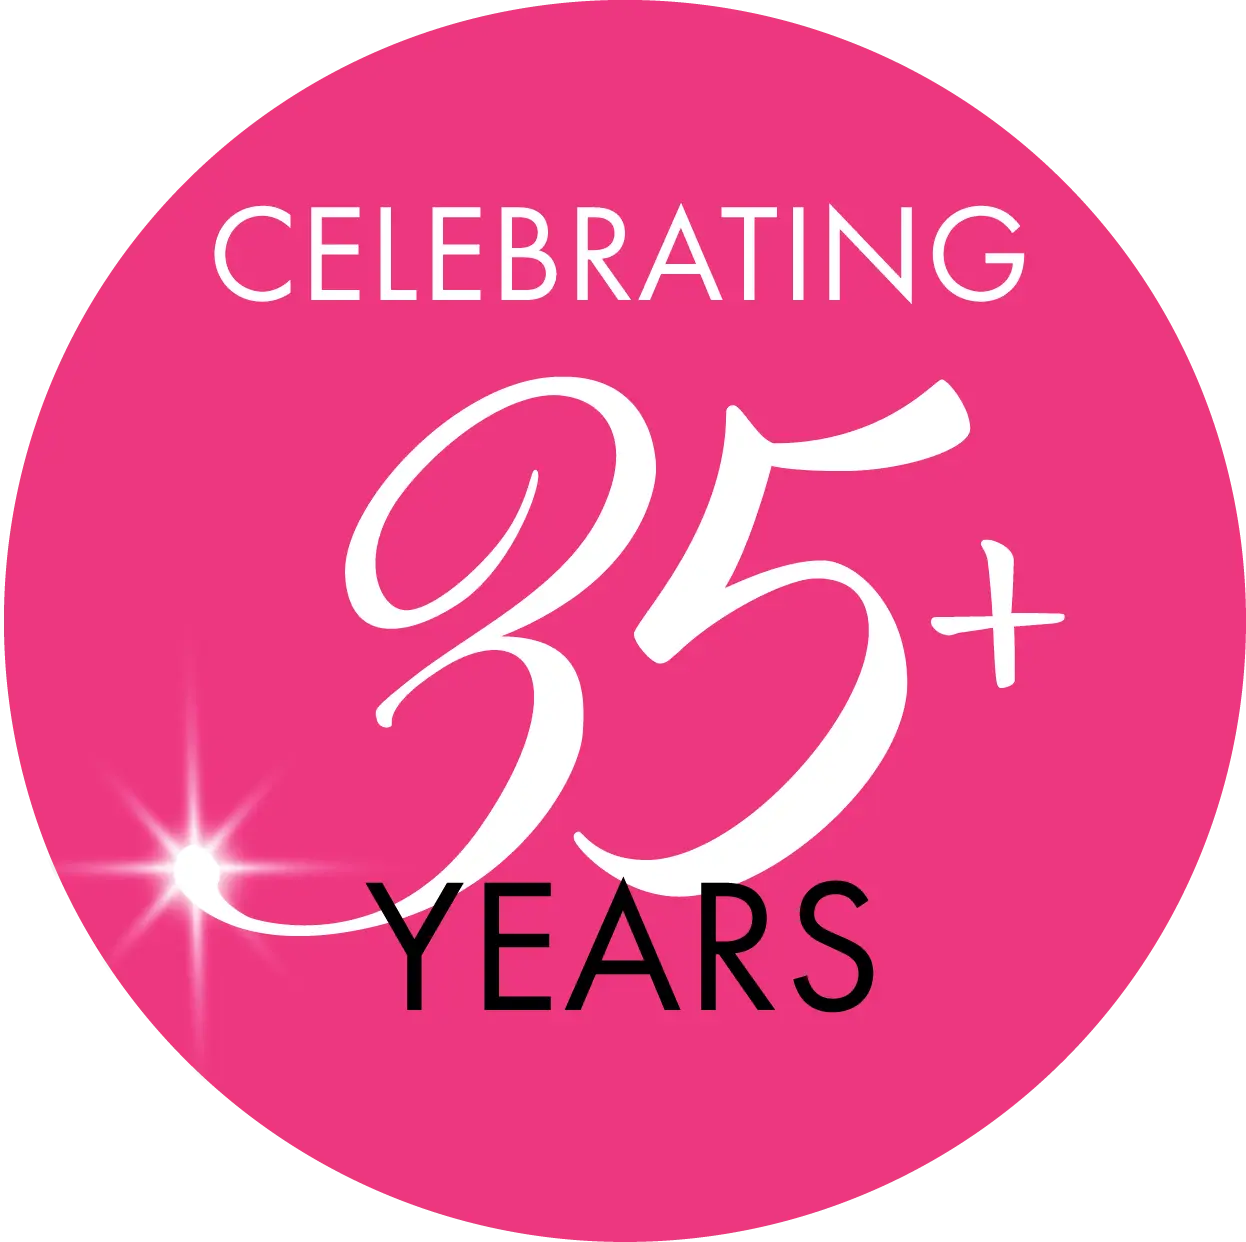 Celebrating 35 plus Years